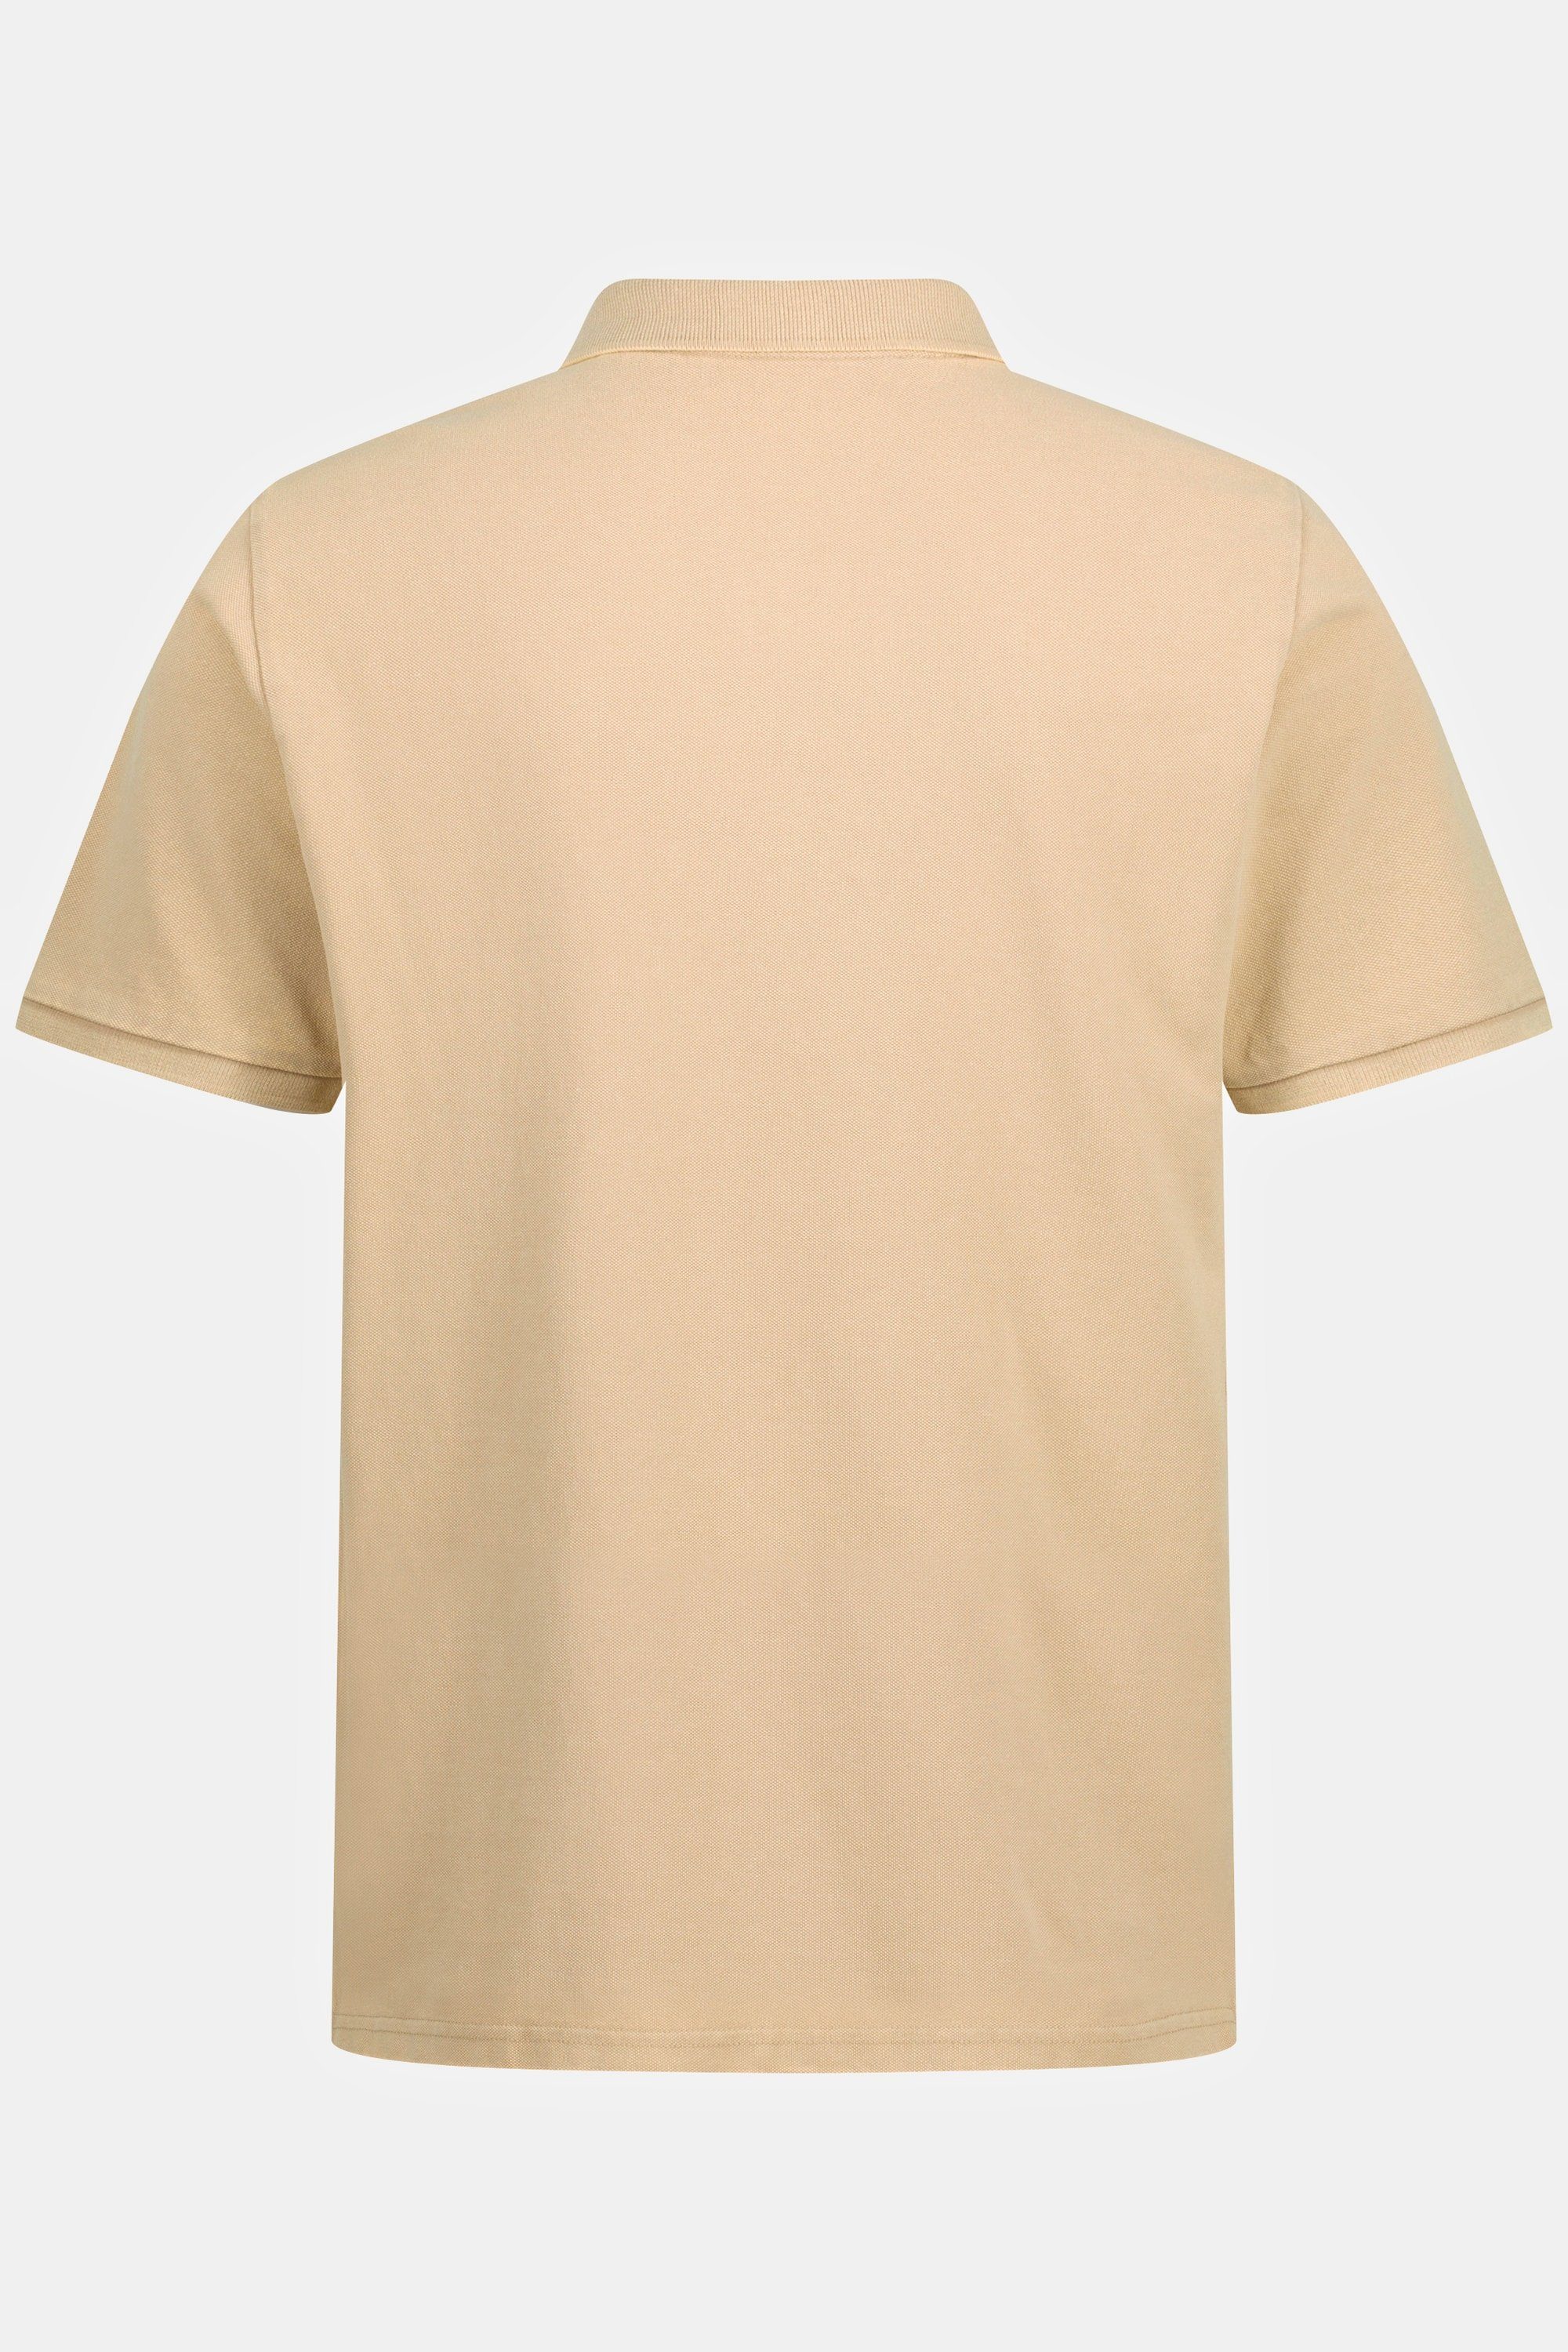 Vintage Poloshirt Halbarm Poloshirt Piqué Waschung beige JP1880